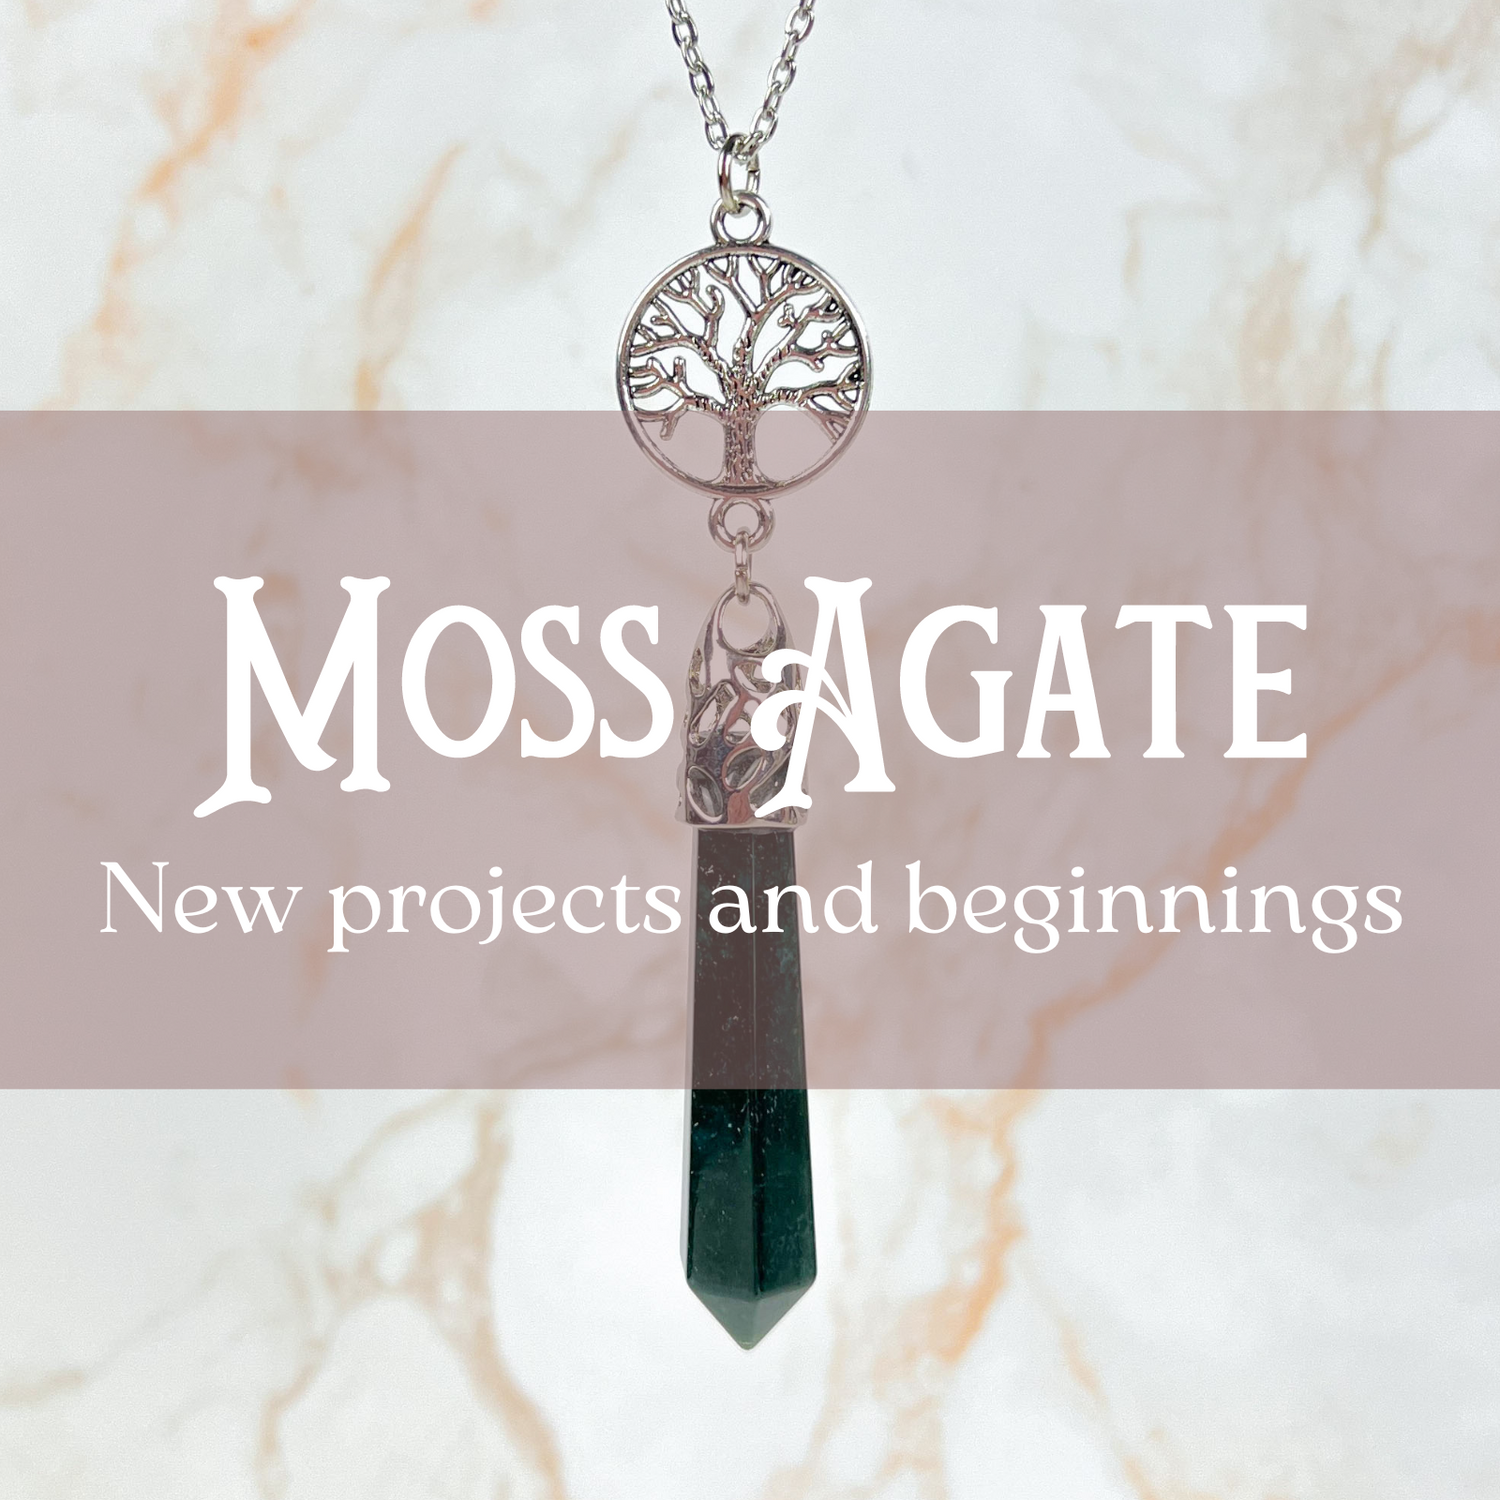 Moss agate jewelry